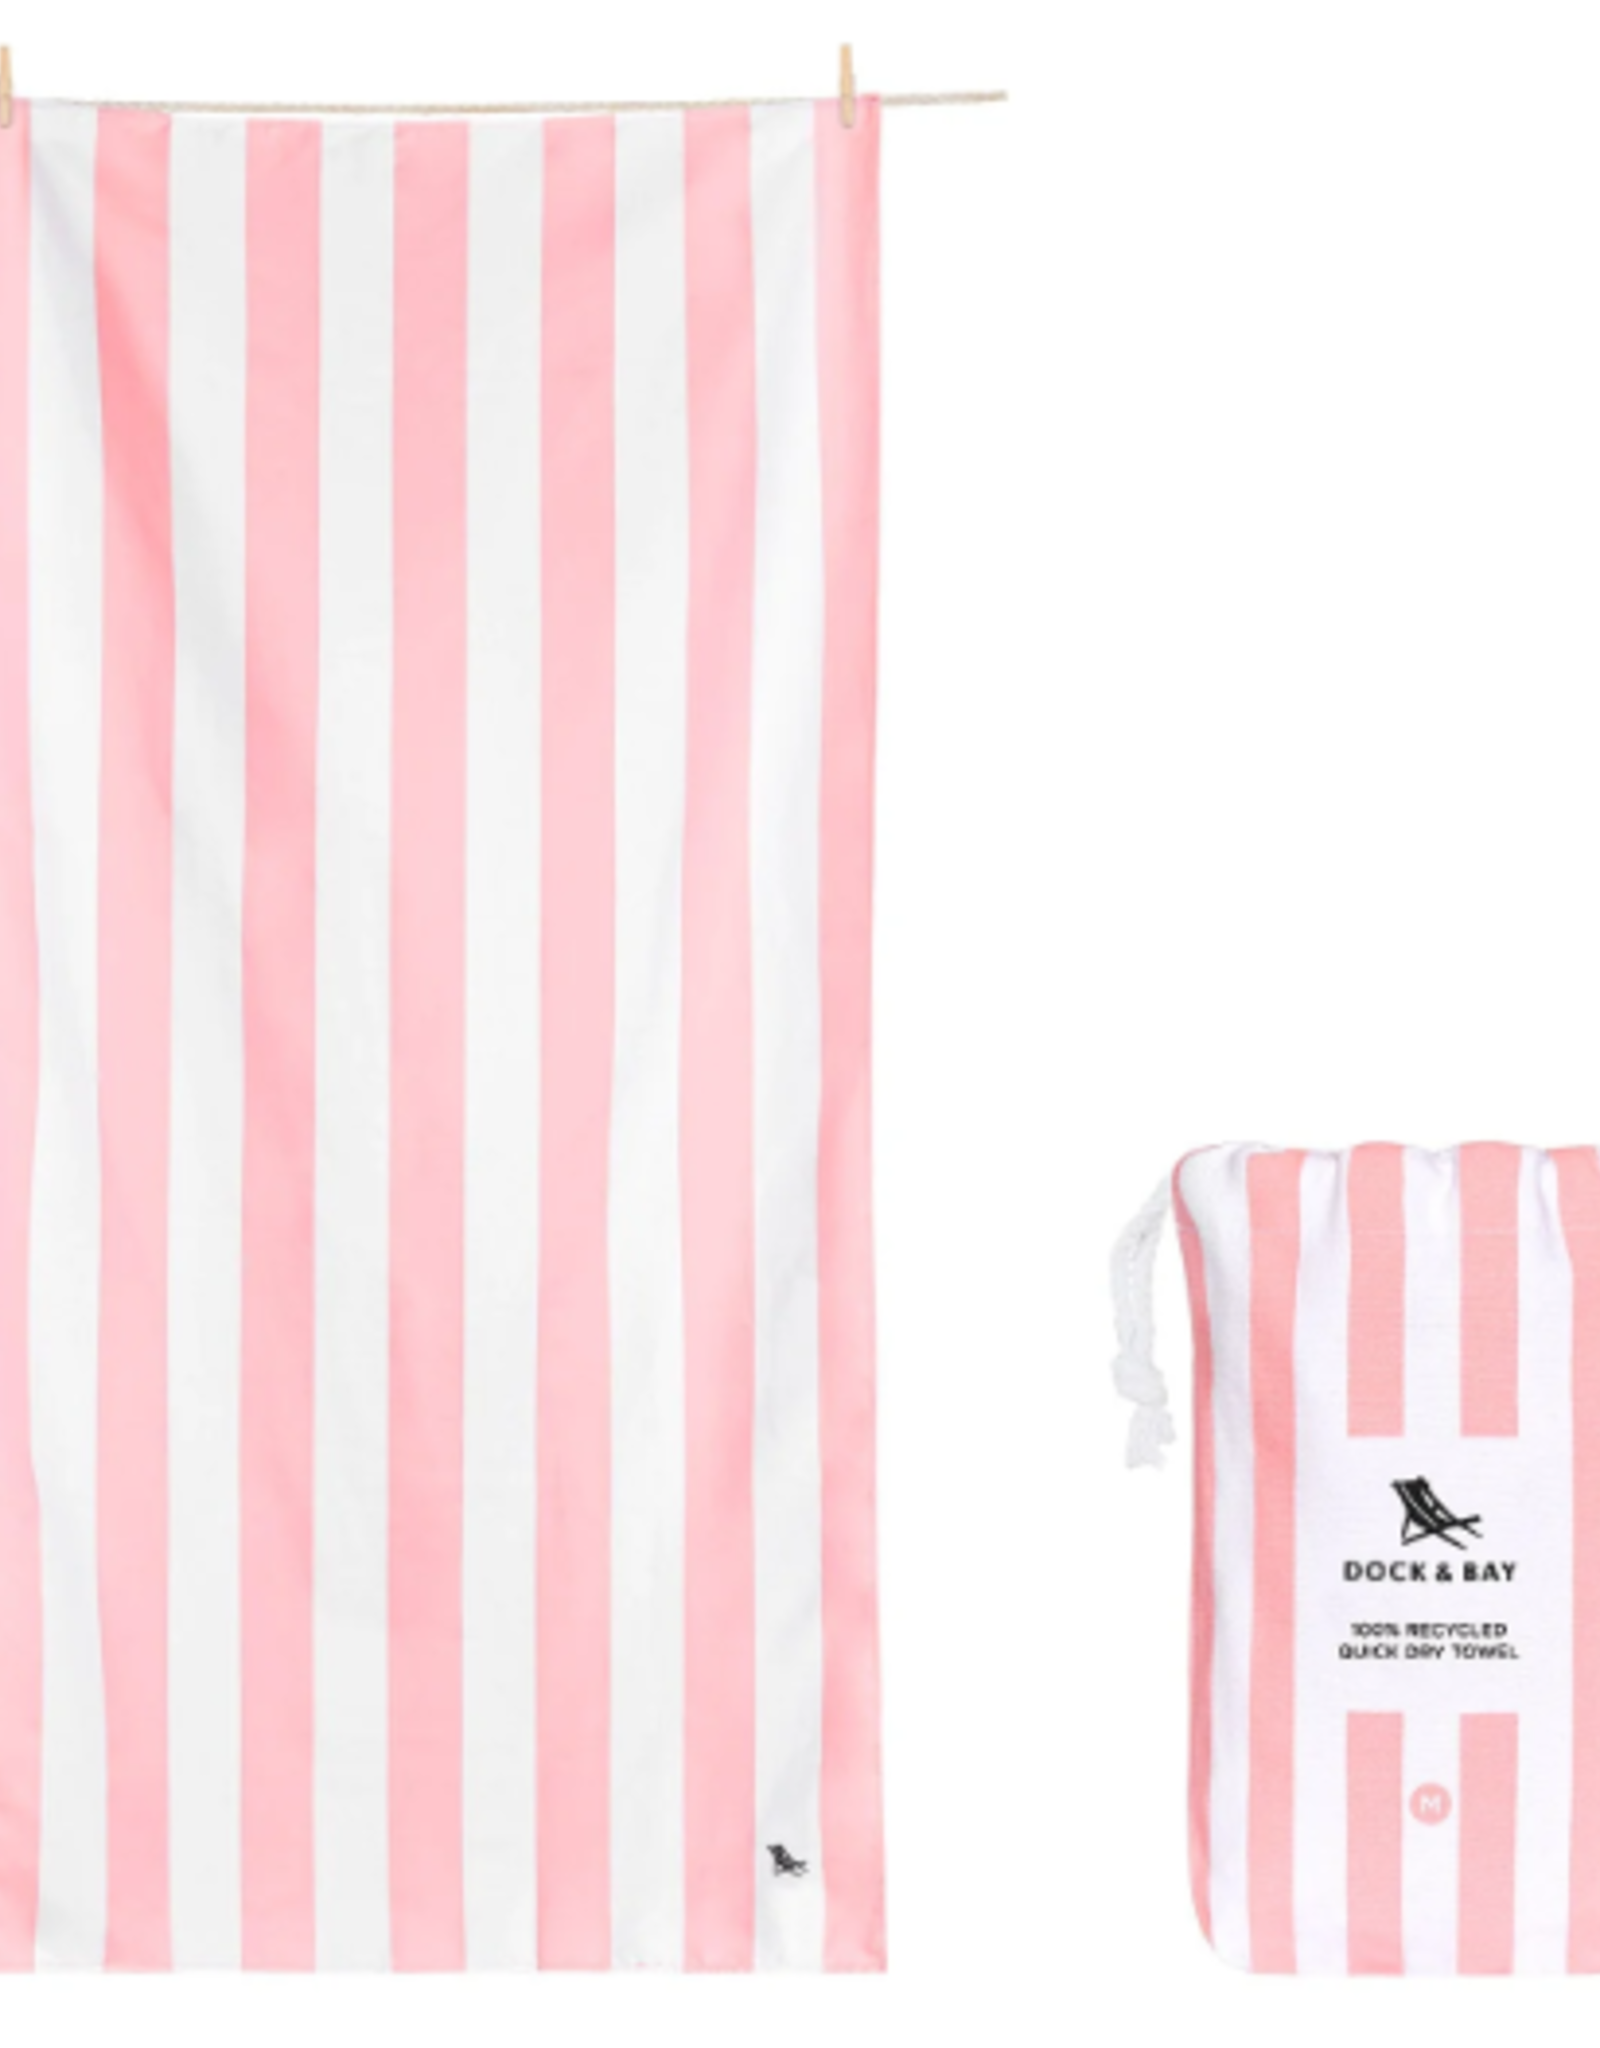 Dock & Bay Malibu Pink Quick Dry Towel M (51x27")